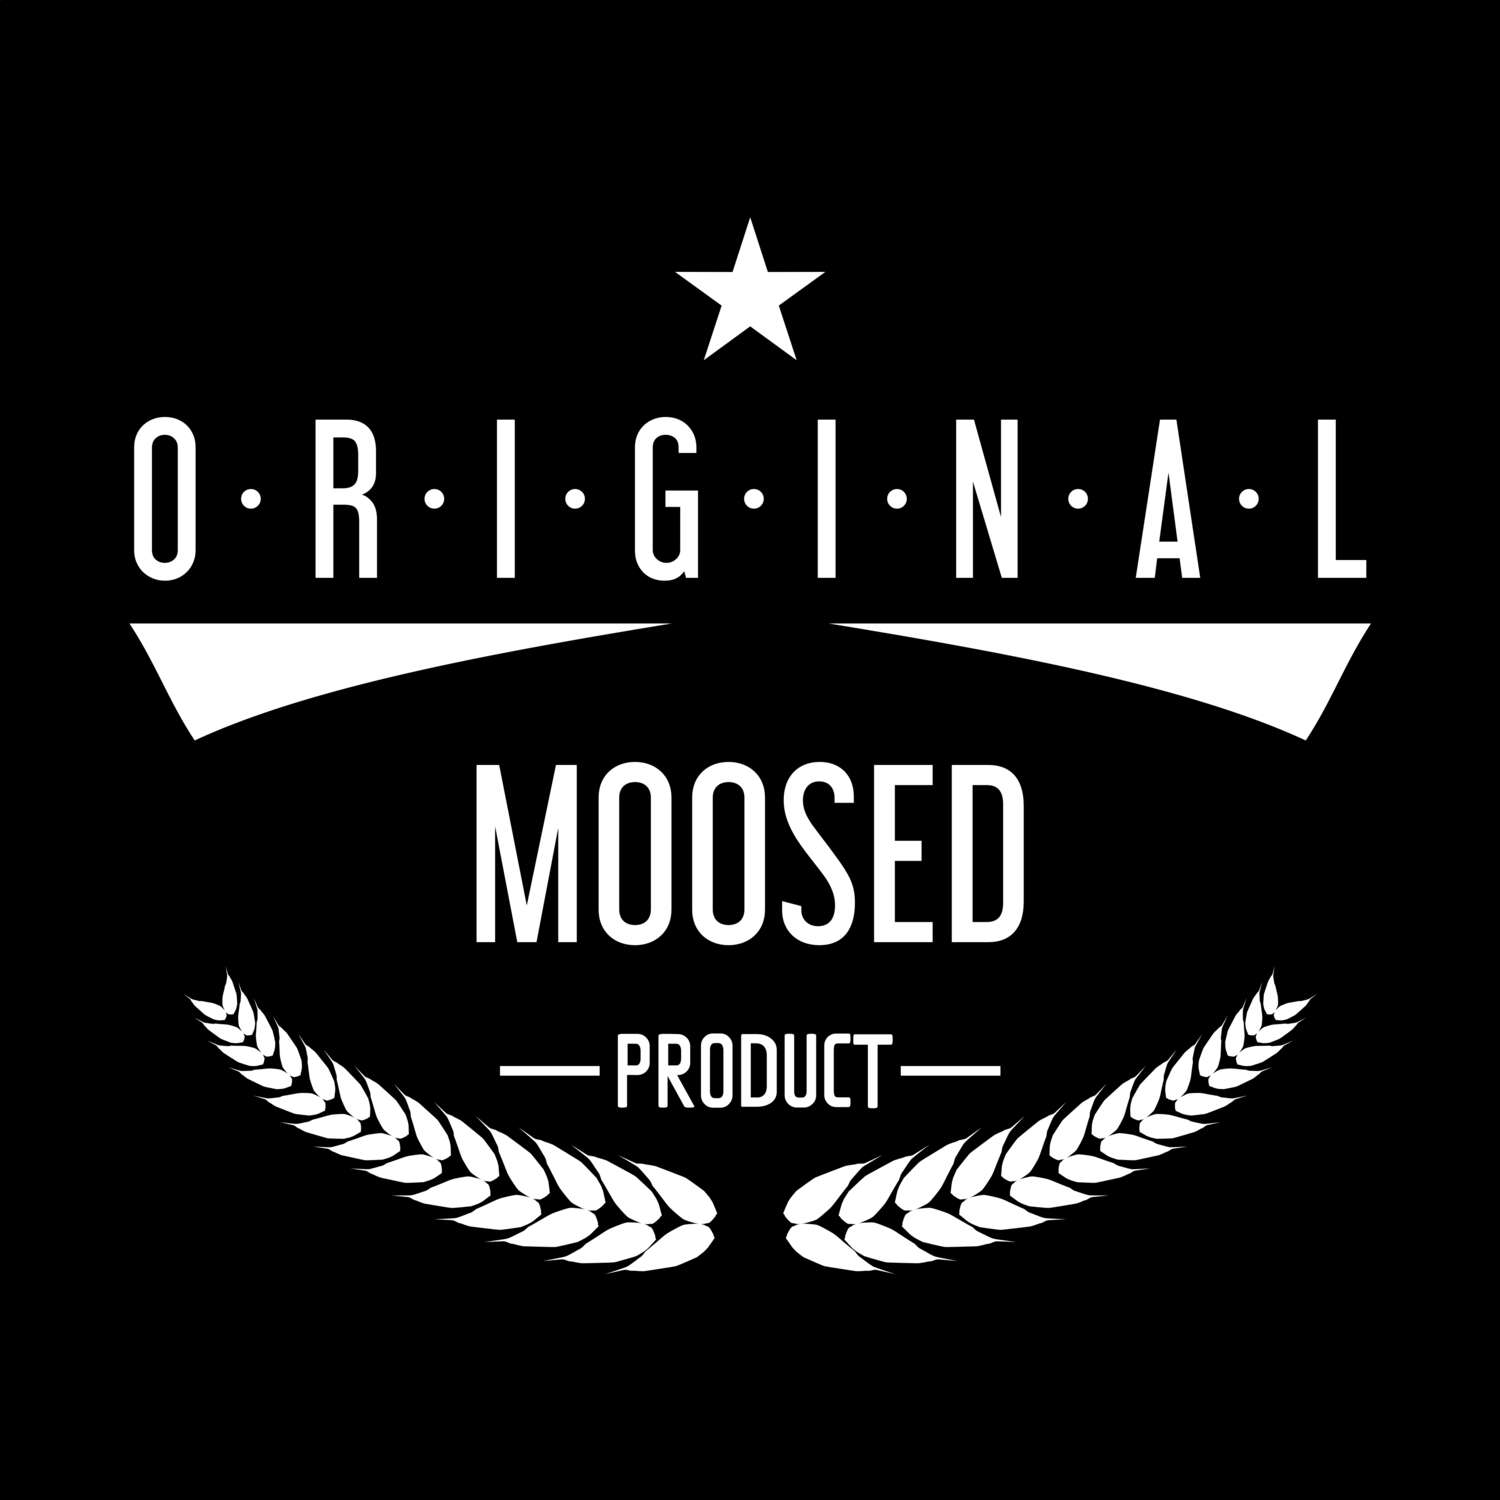 Moosed T-Shirt »Original Product«